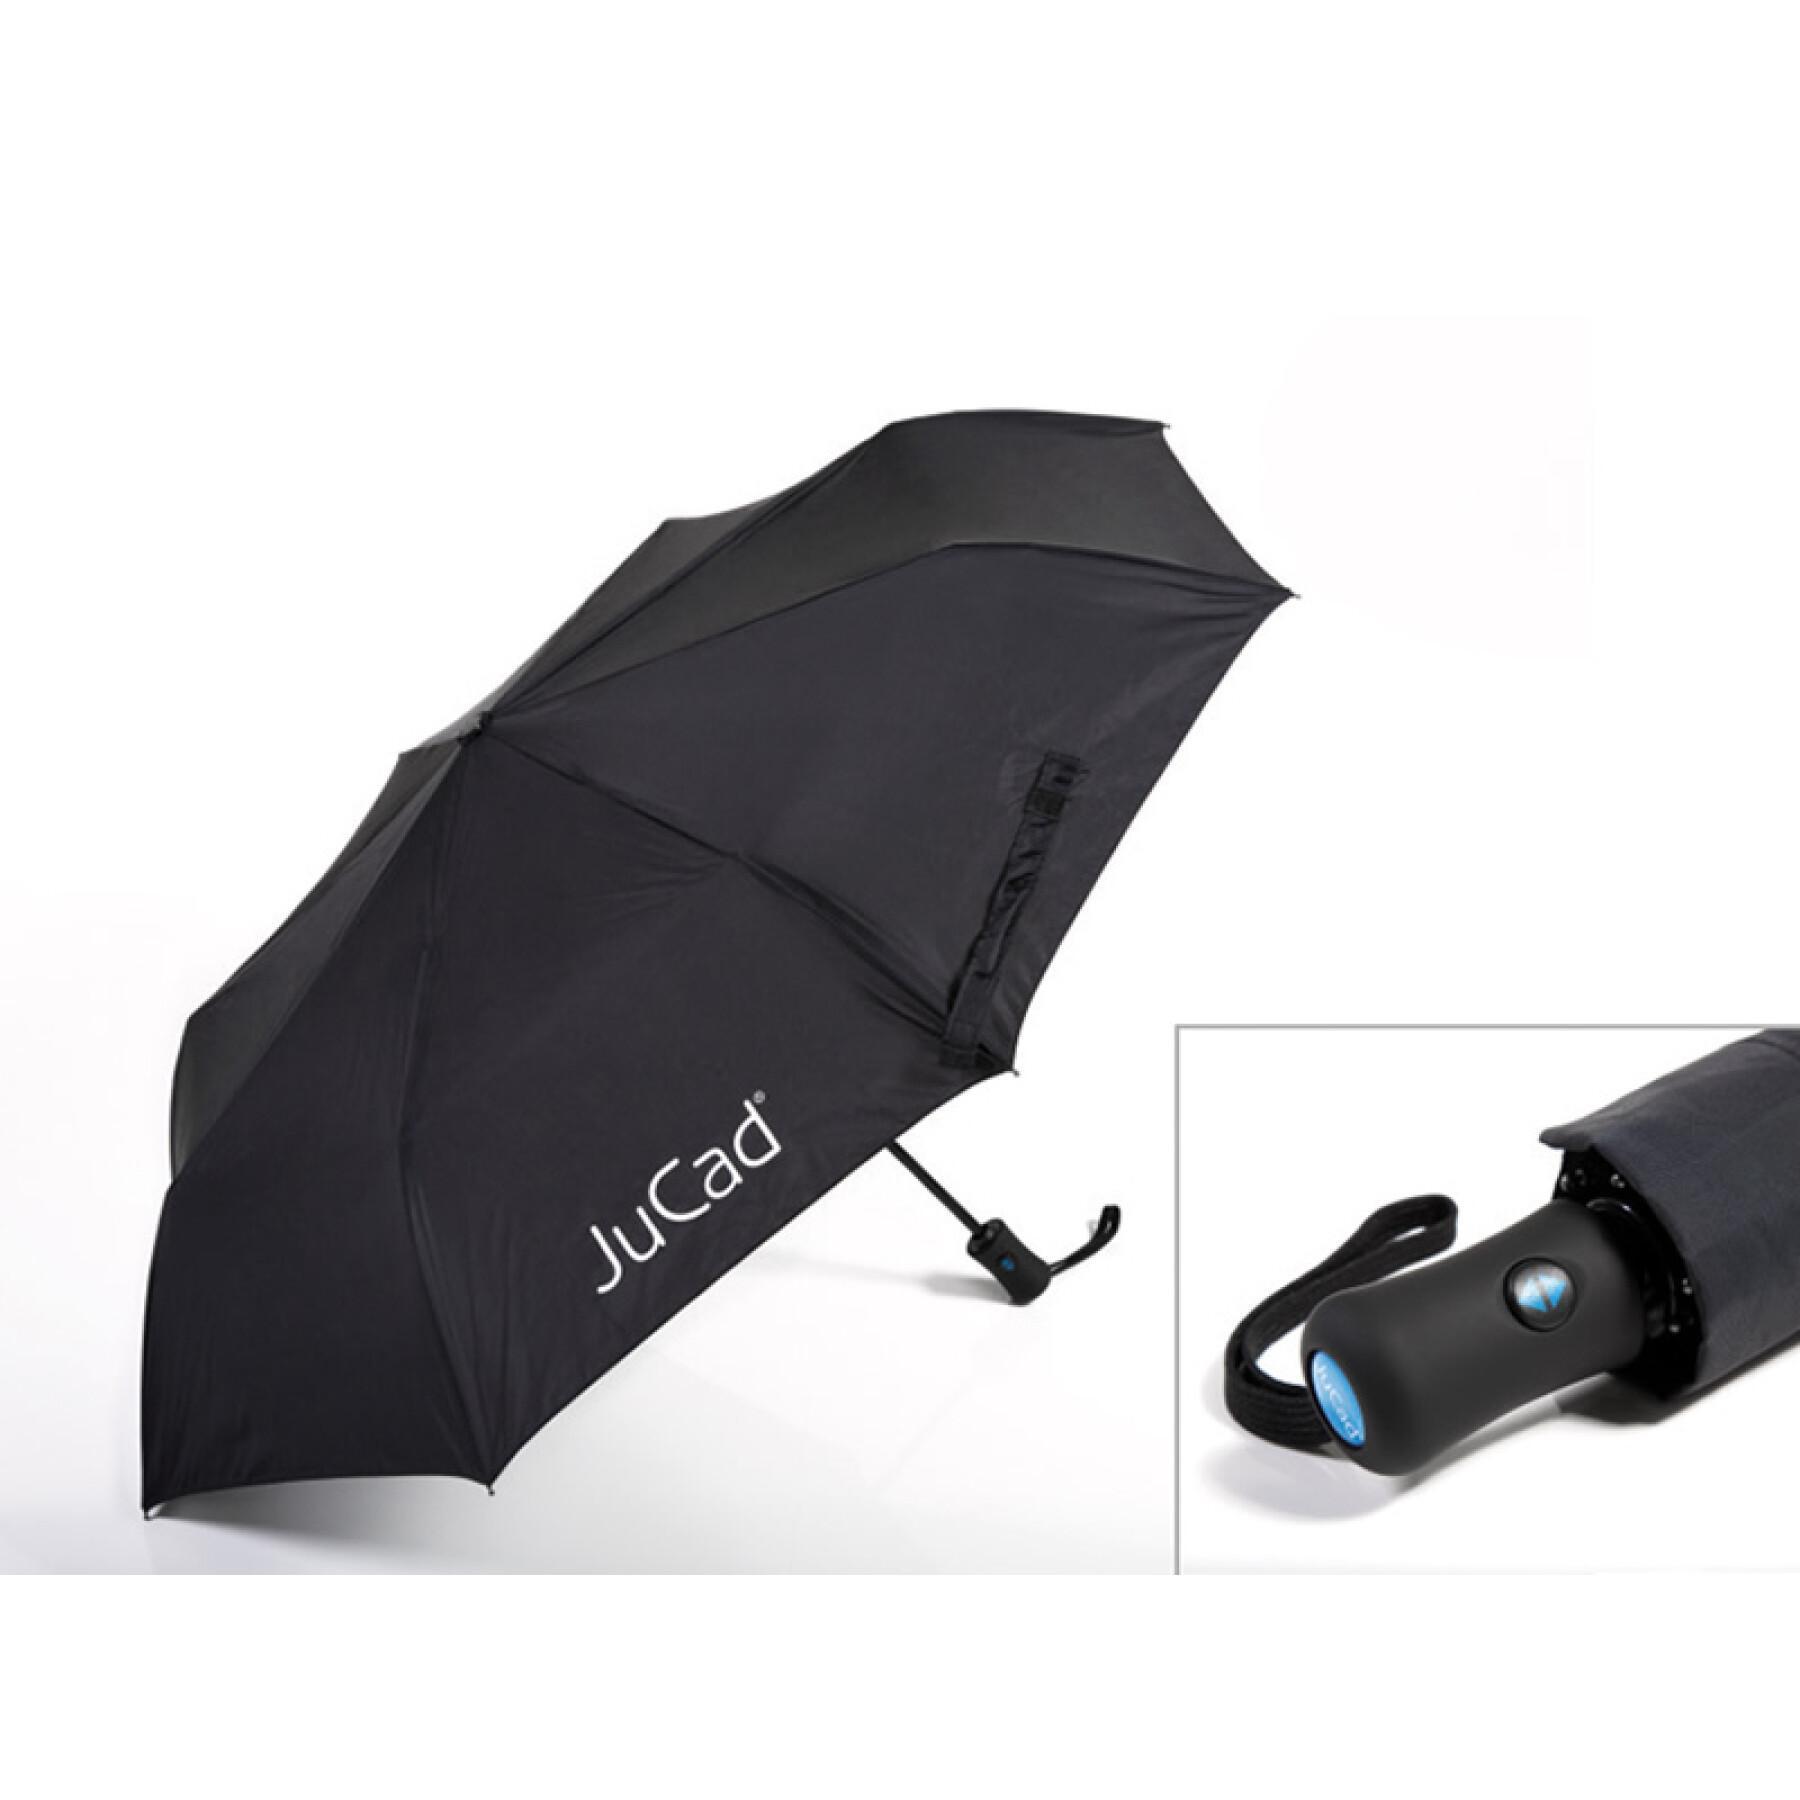 Paraguas de bolsillo JuCad